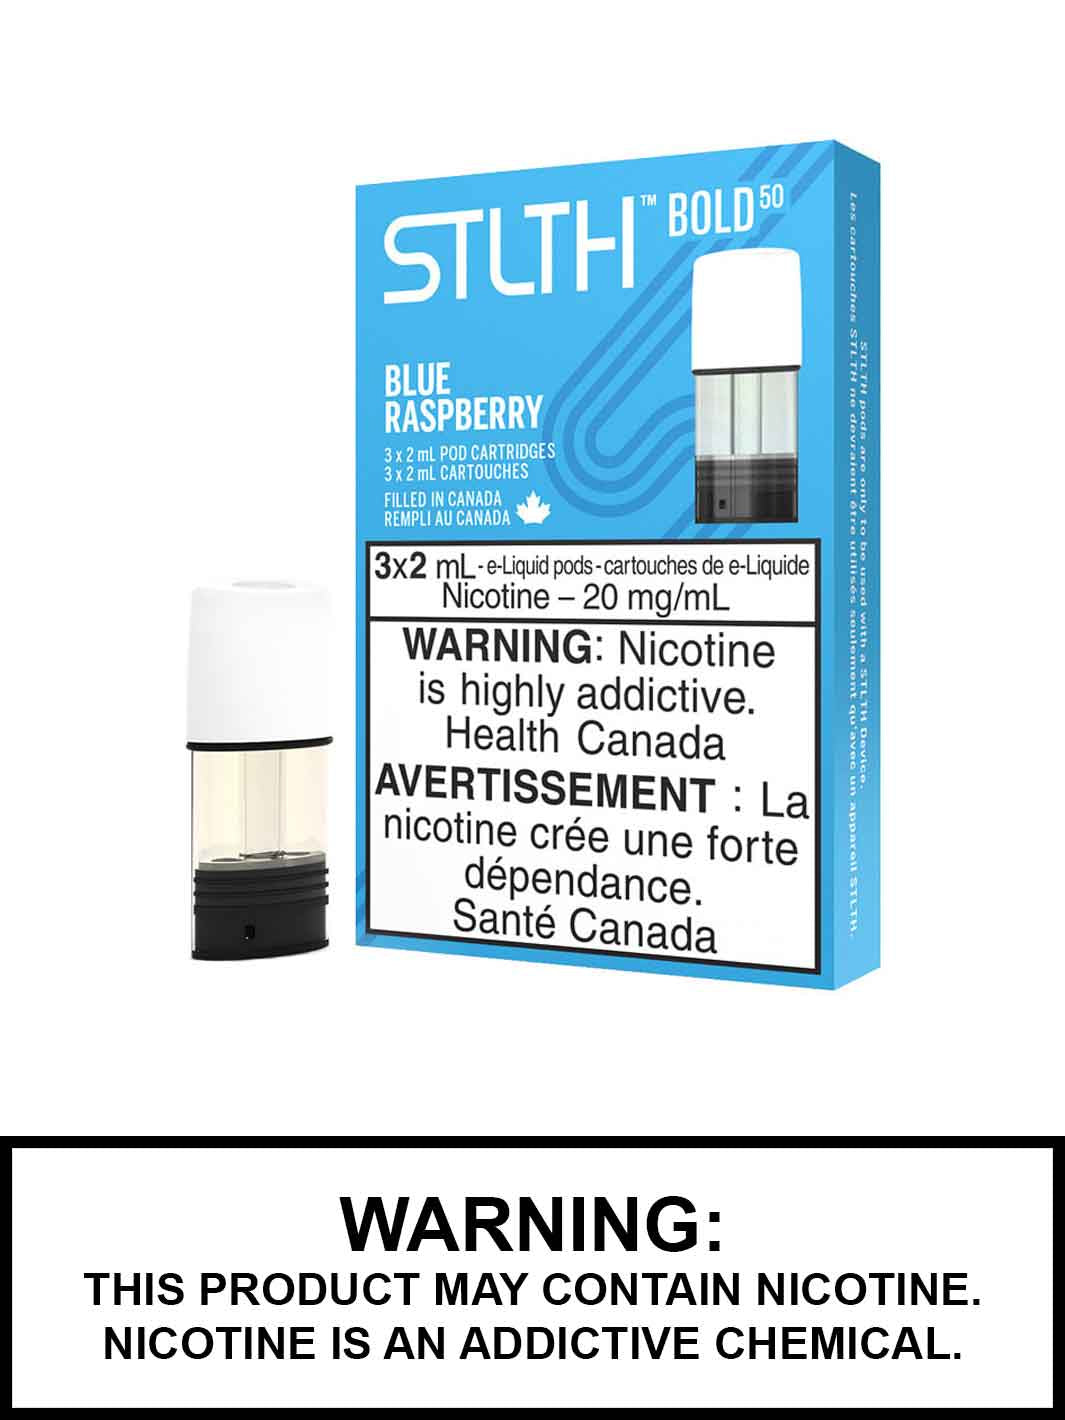 Blue Raspberry Bold 50 STLTH Pods Canada, Blue Raspberry eJuice, Vape360